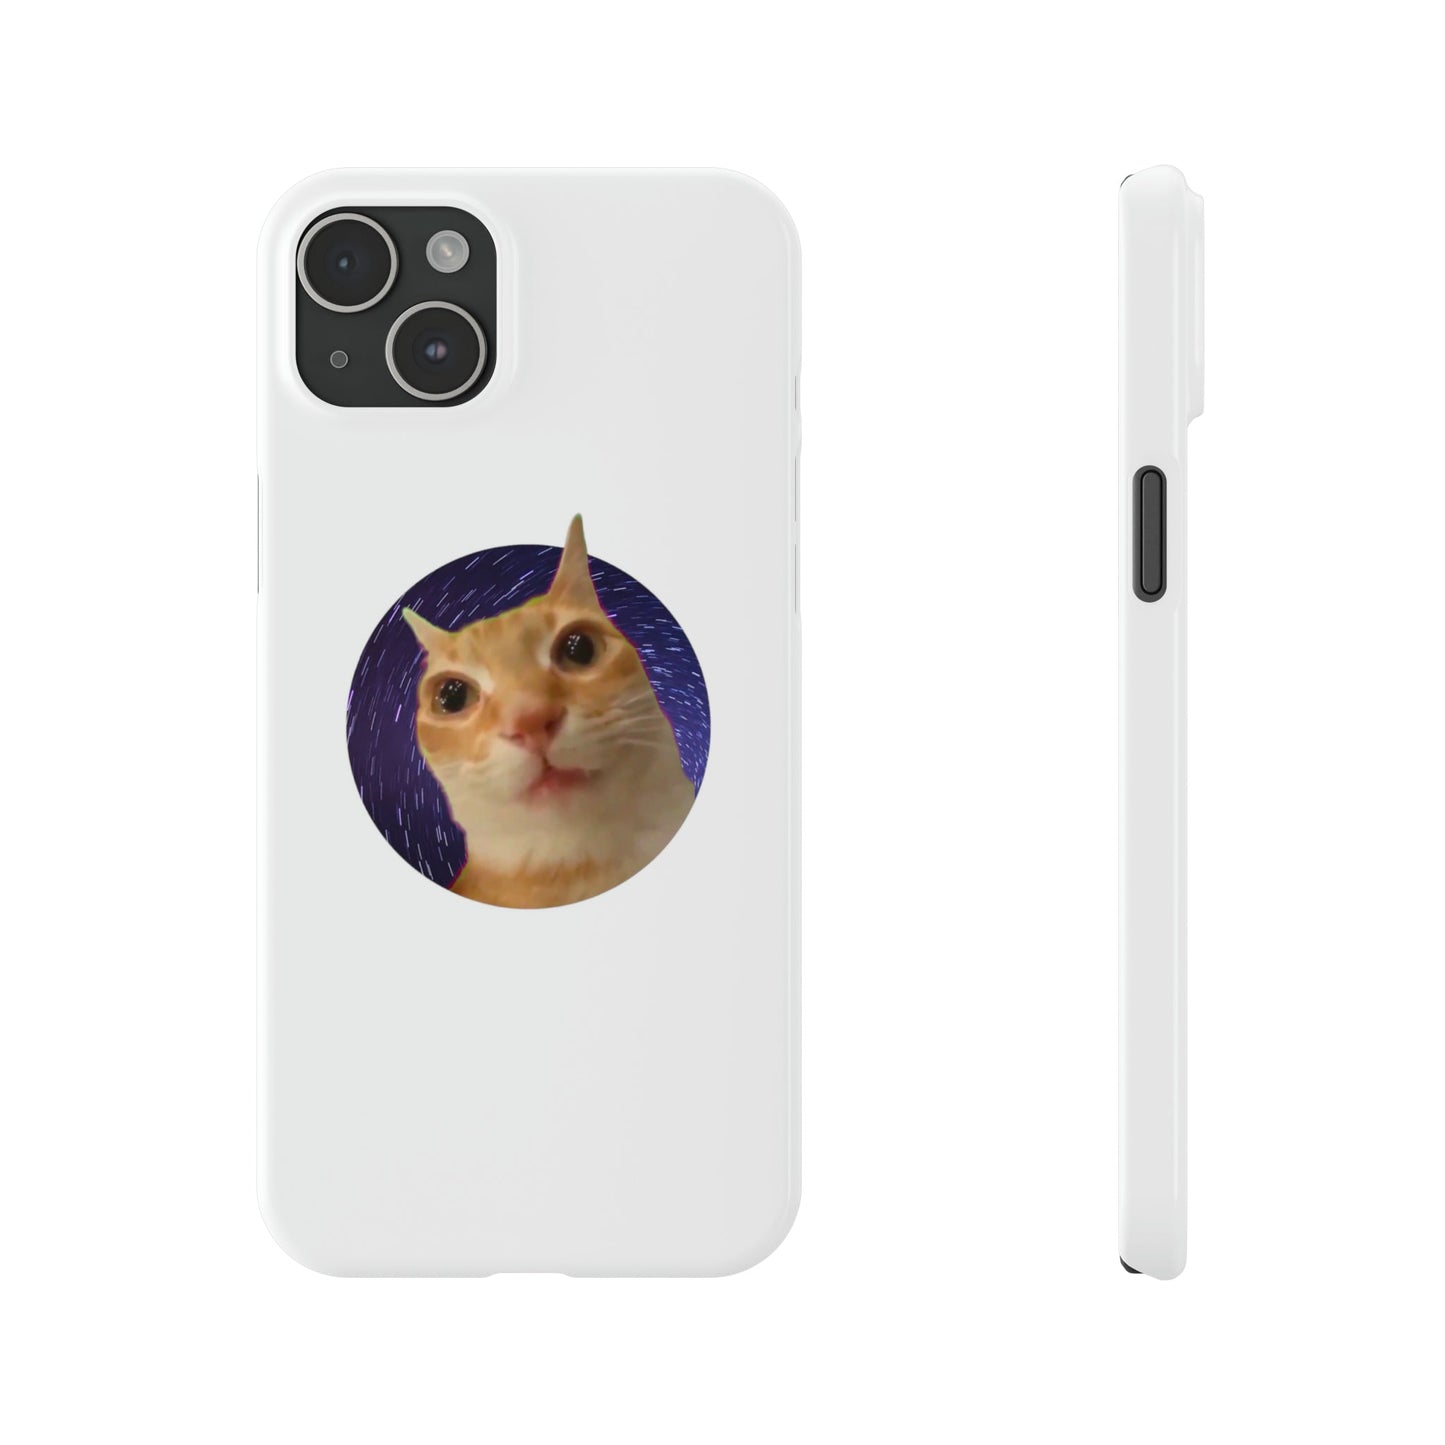 Spaced Out Cat Meme Slim Phone Cases - getallfun